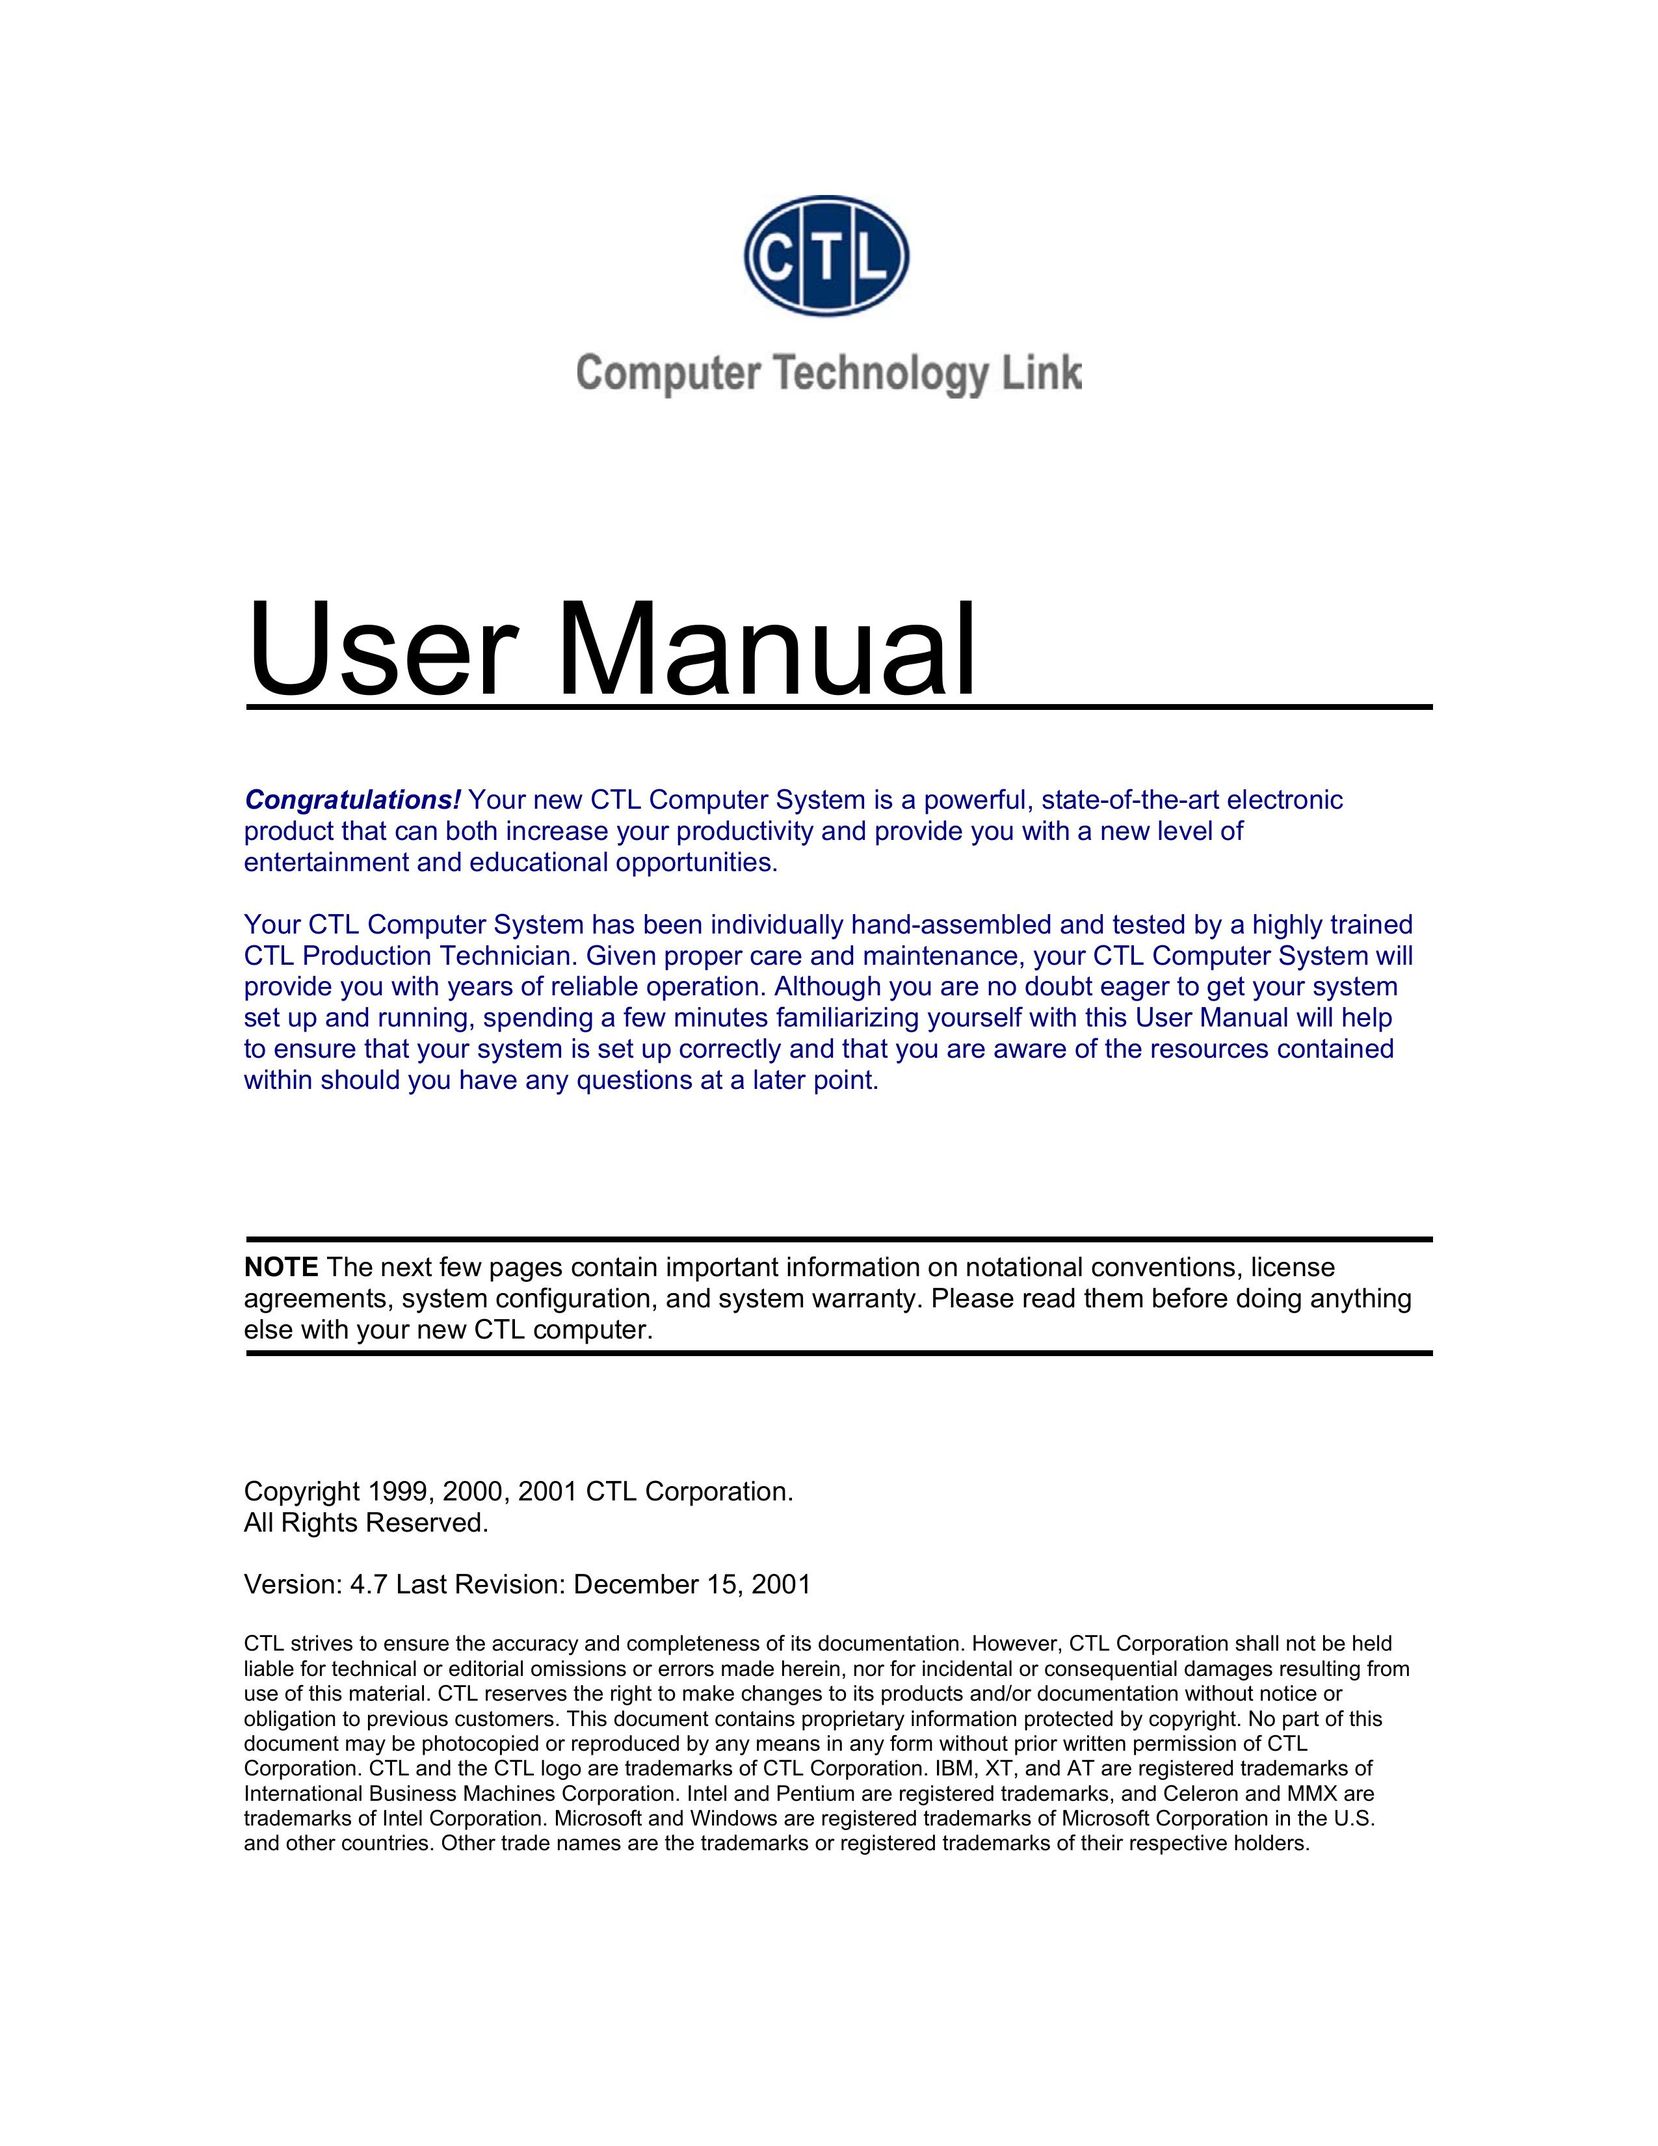 Computer Tech Link Nexus Personal Computer User Manual